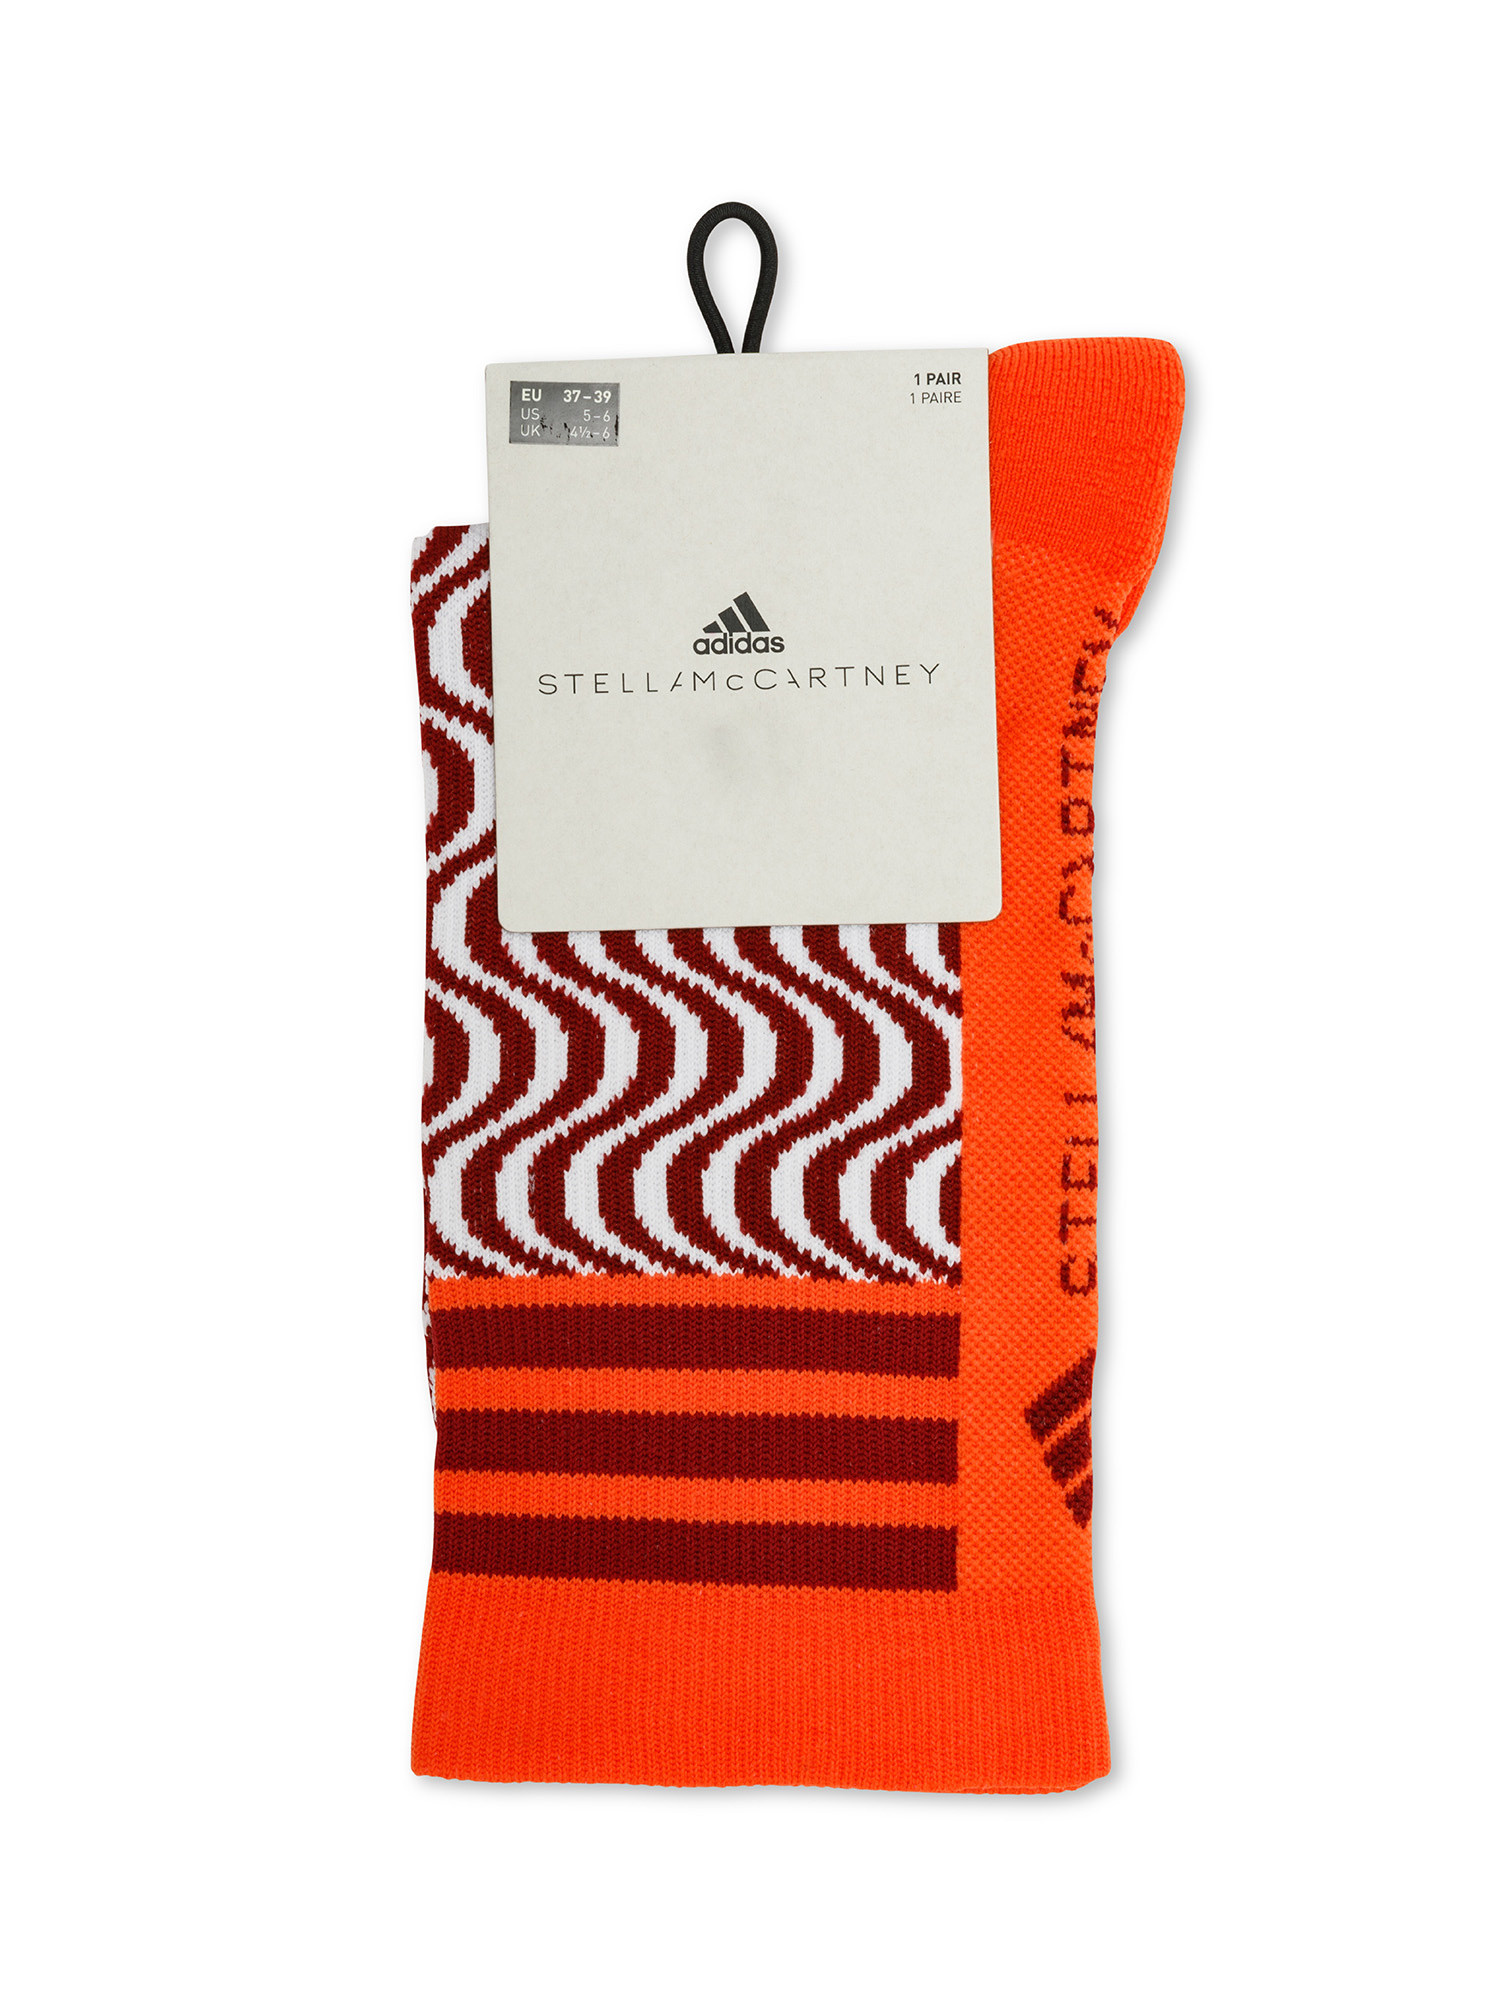 Adidas by Stella McCartney - Calze con logo, Bianco, large image number 0